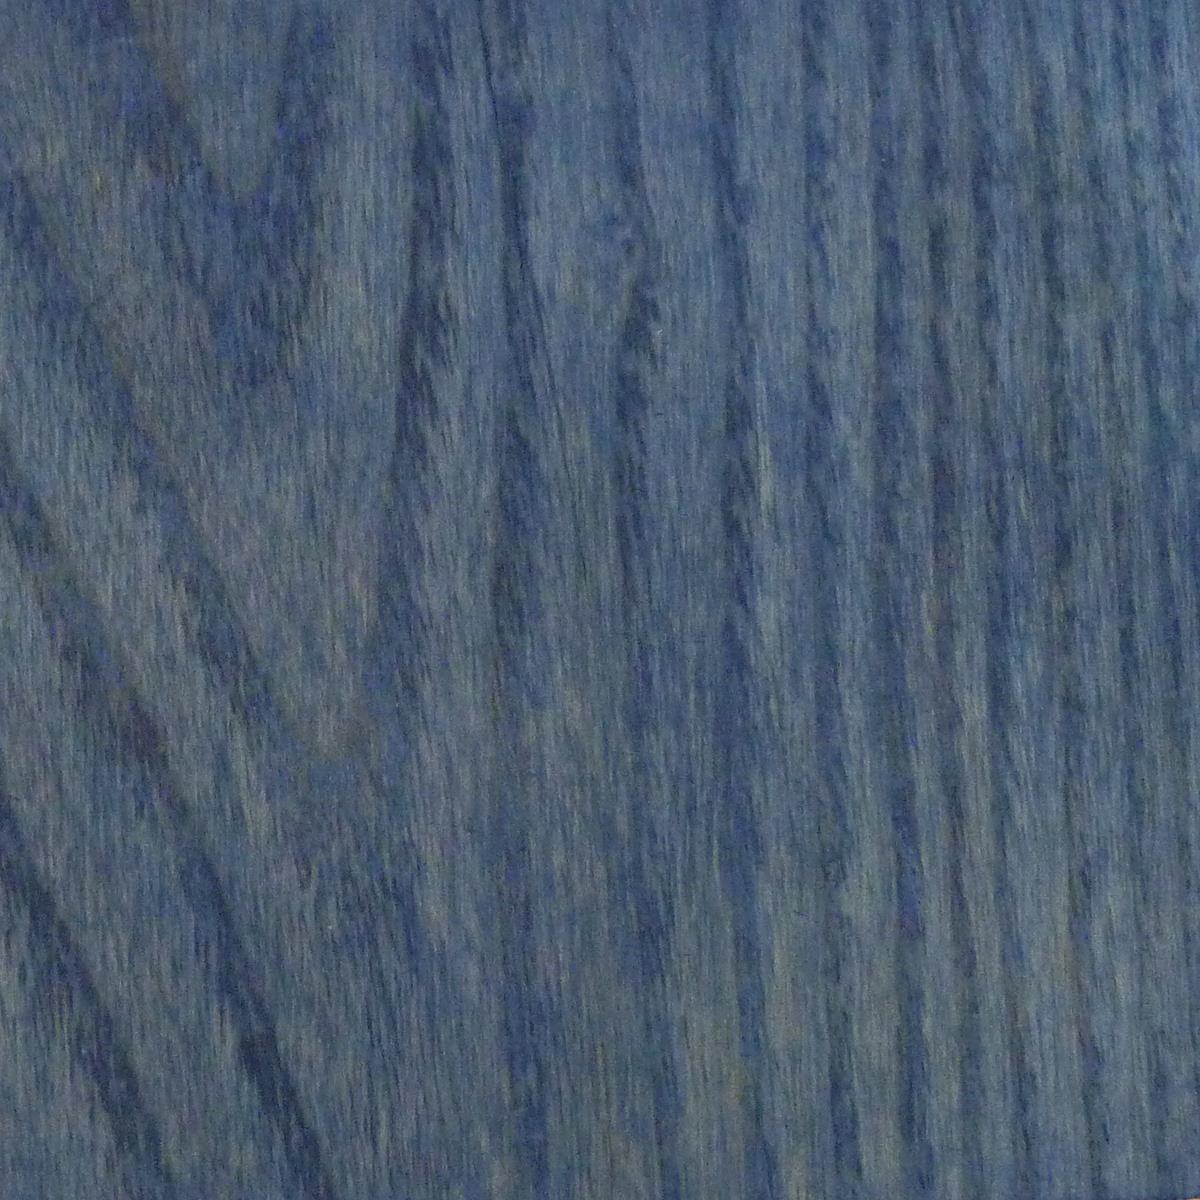 dartfords Navy Blue Interior Spirit Based Wood Dye - 1 litre Tin